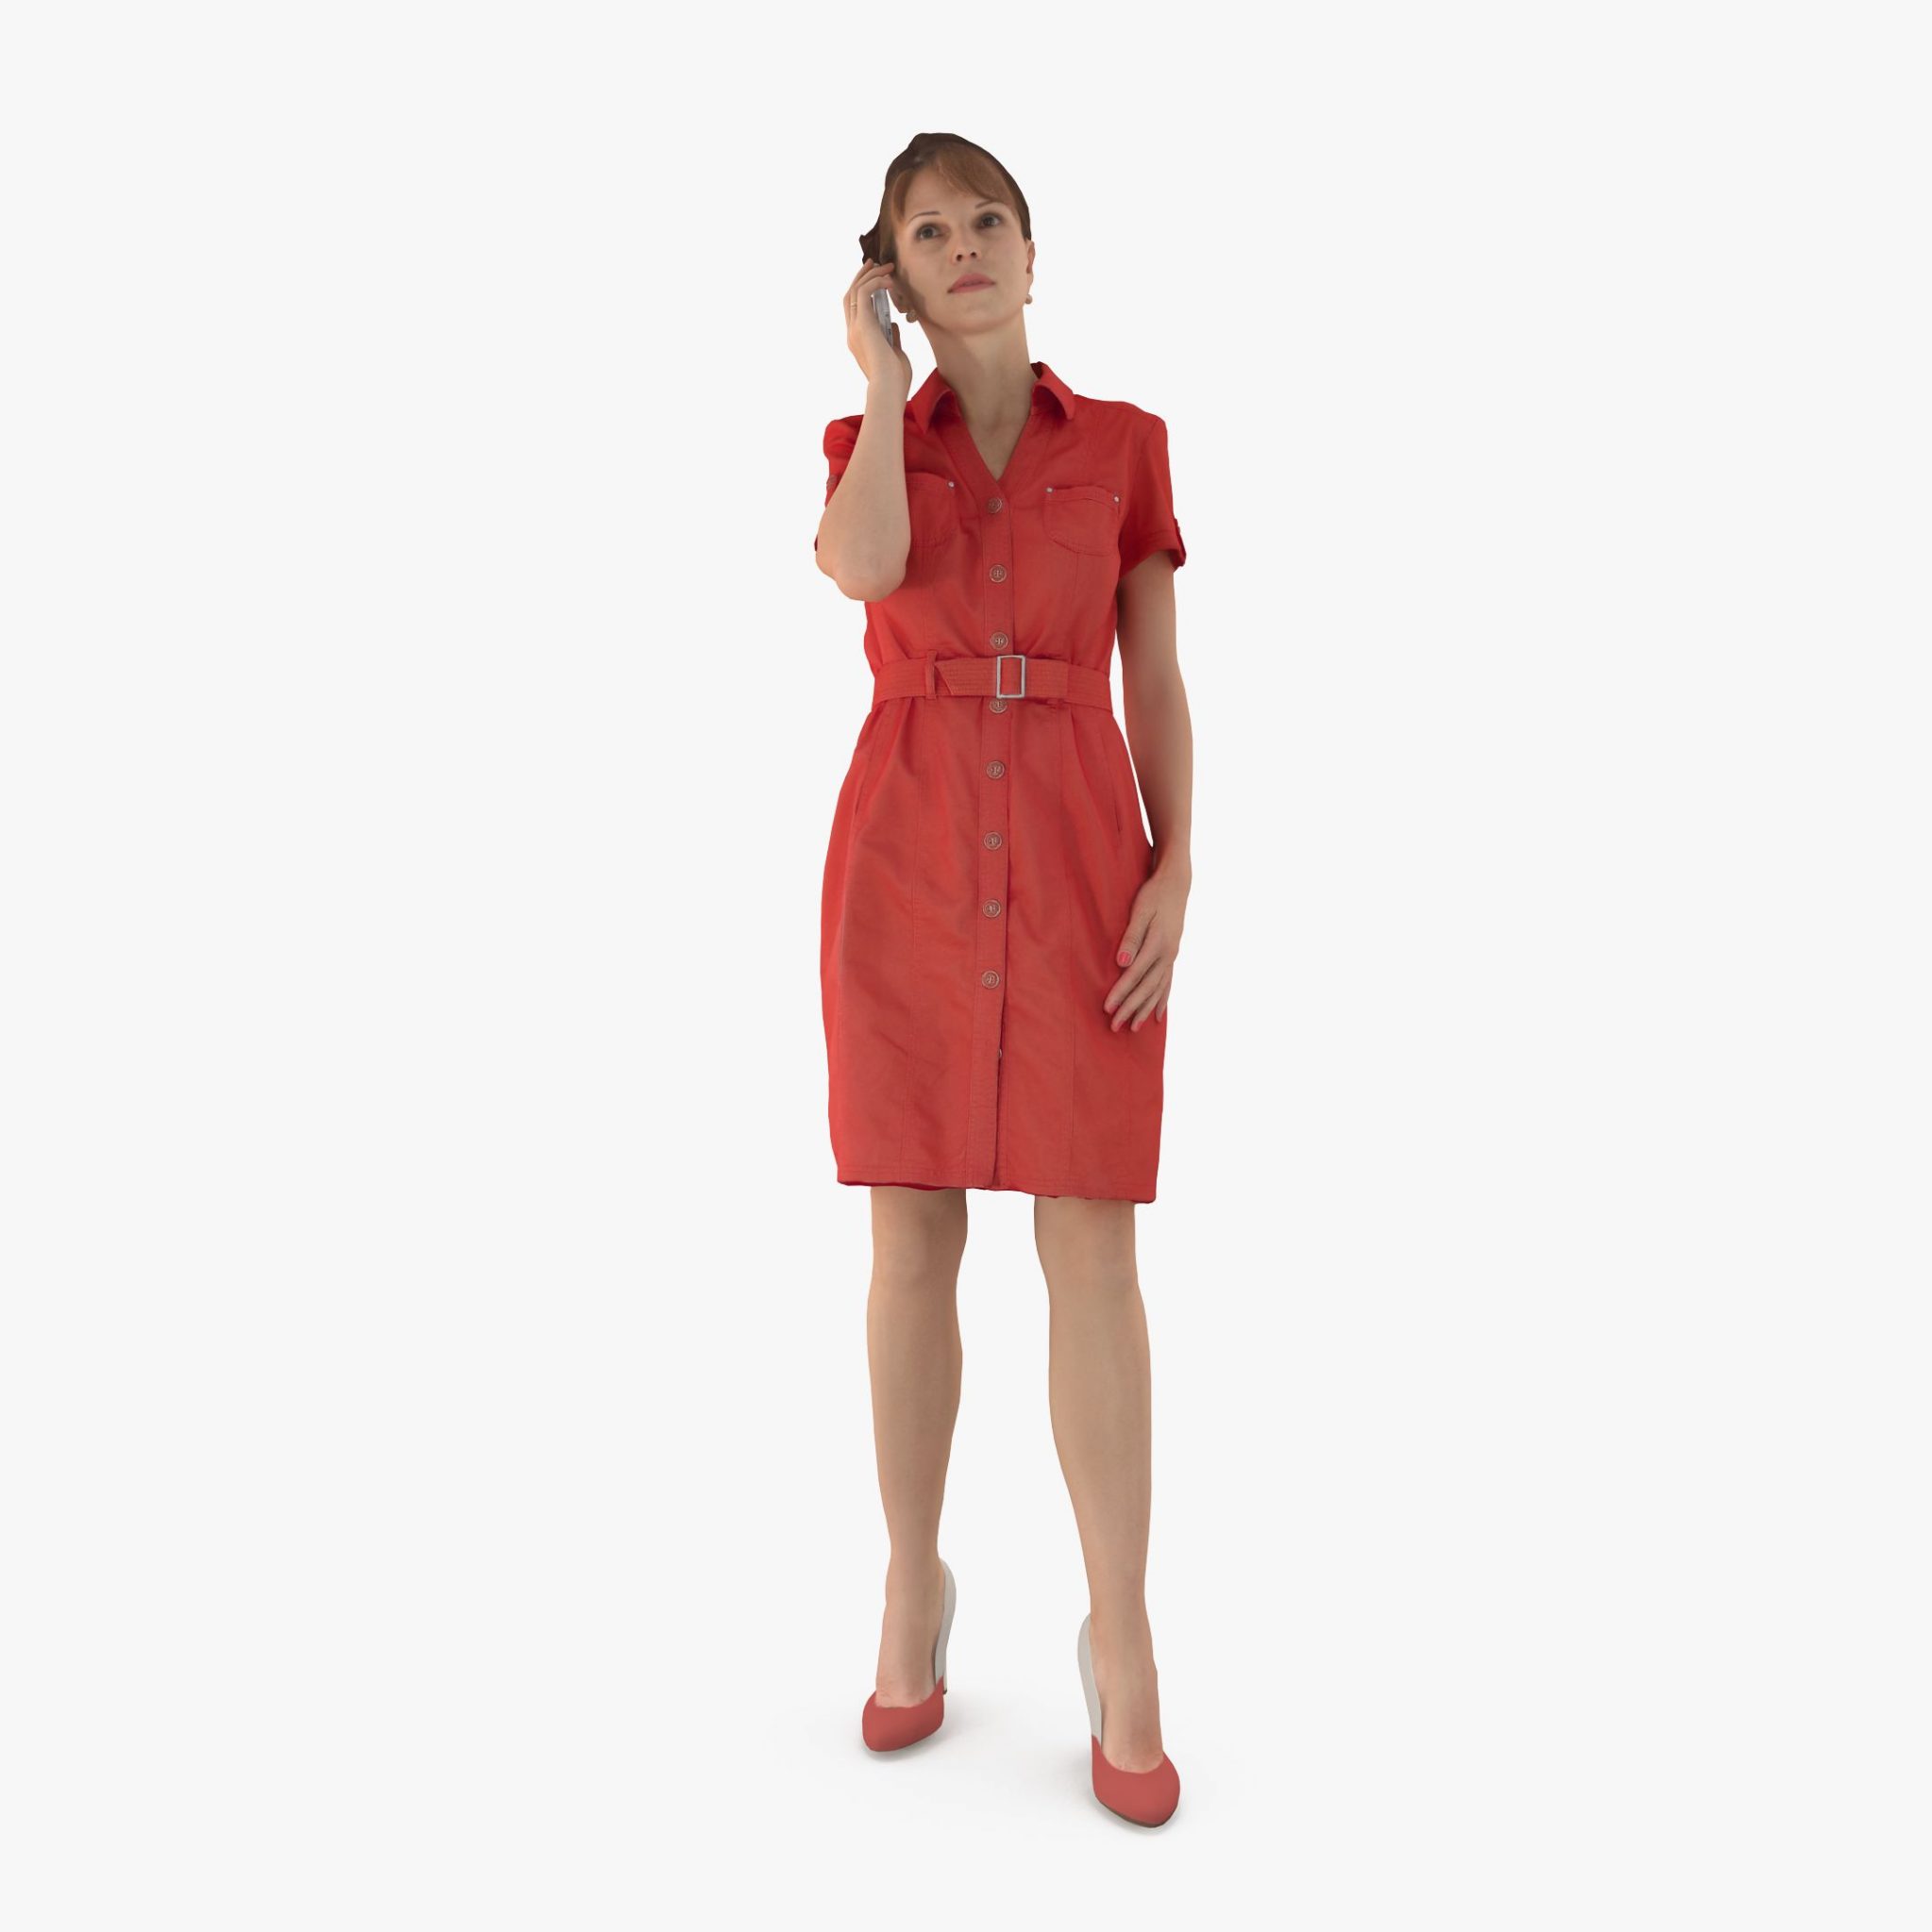 Lady in Red Dress 3D Model | 3DTree Scanning Studio